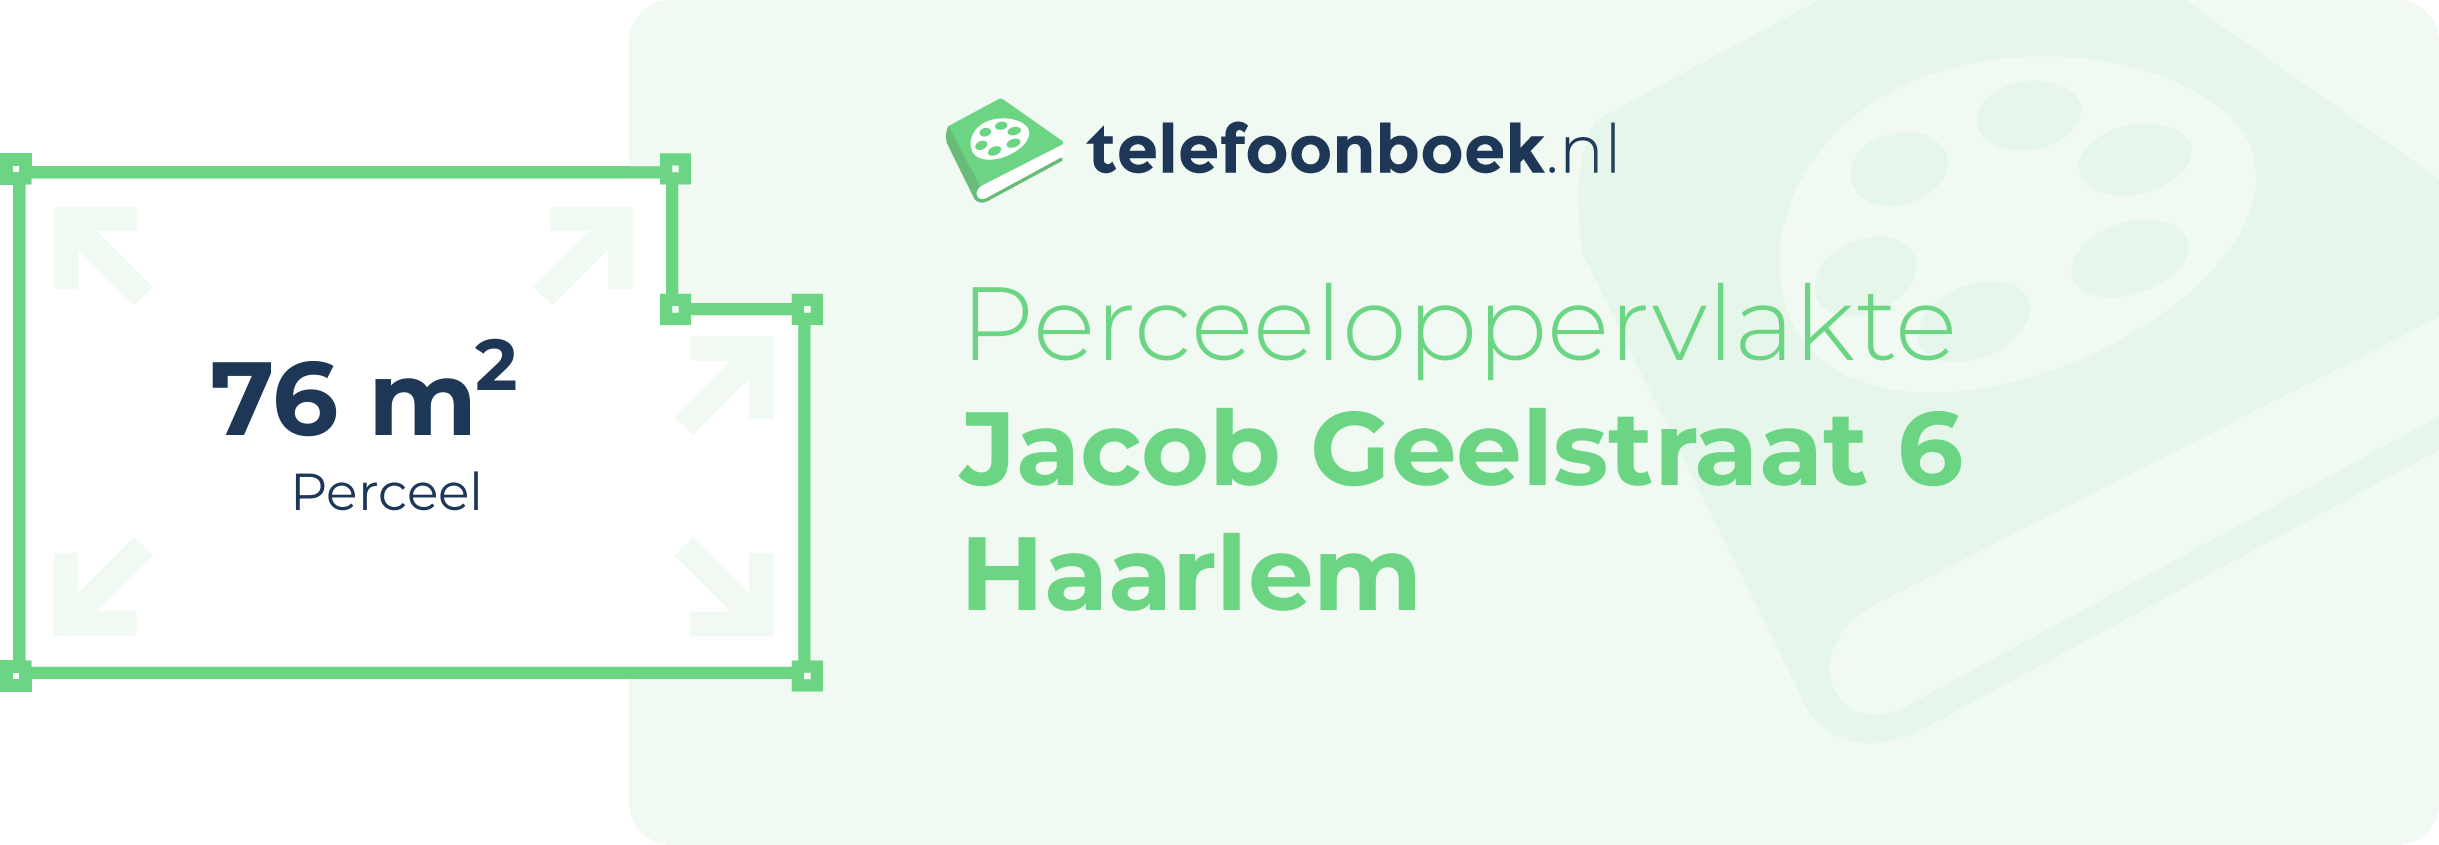 Perceeloppervlakte Jacob Geelstraat 6 Haarlem